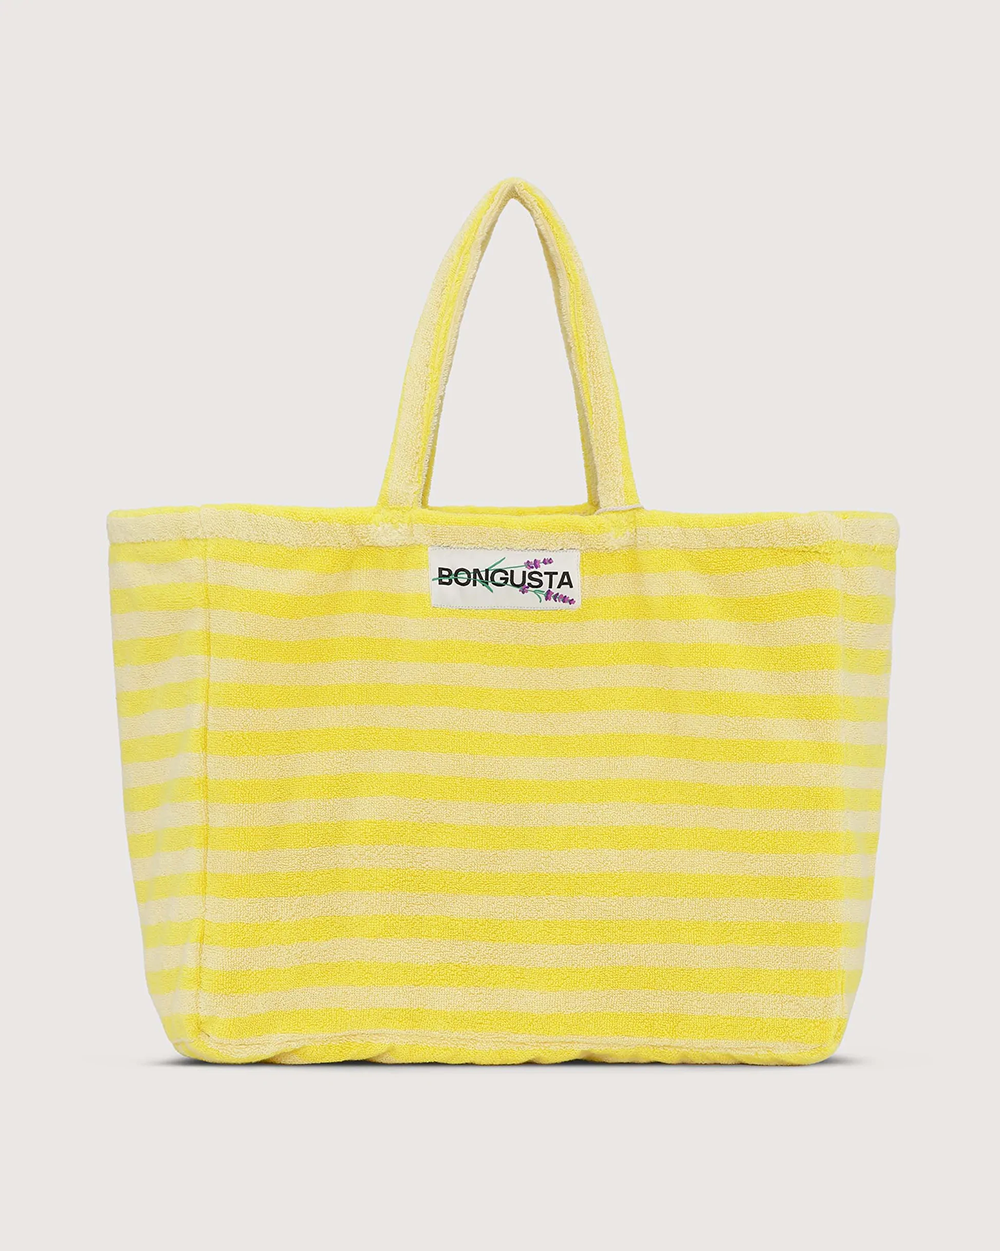 (Bongusta) Naram Weekend bag - Pristine & Neon yellow